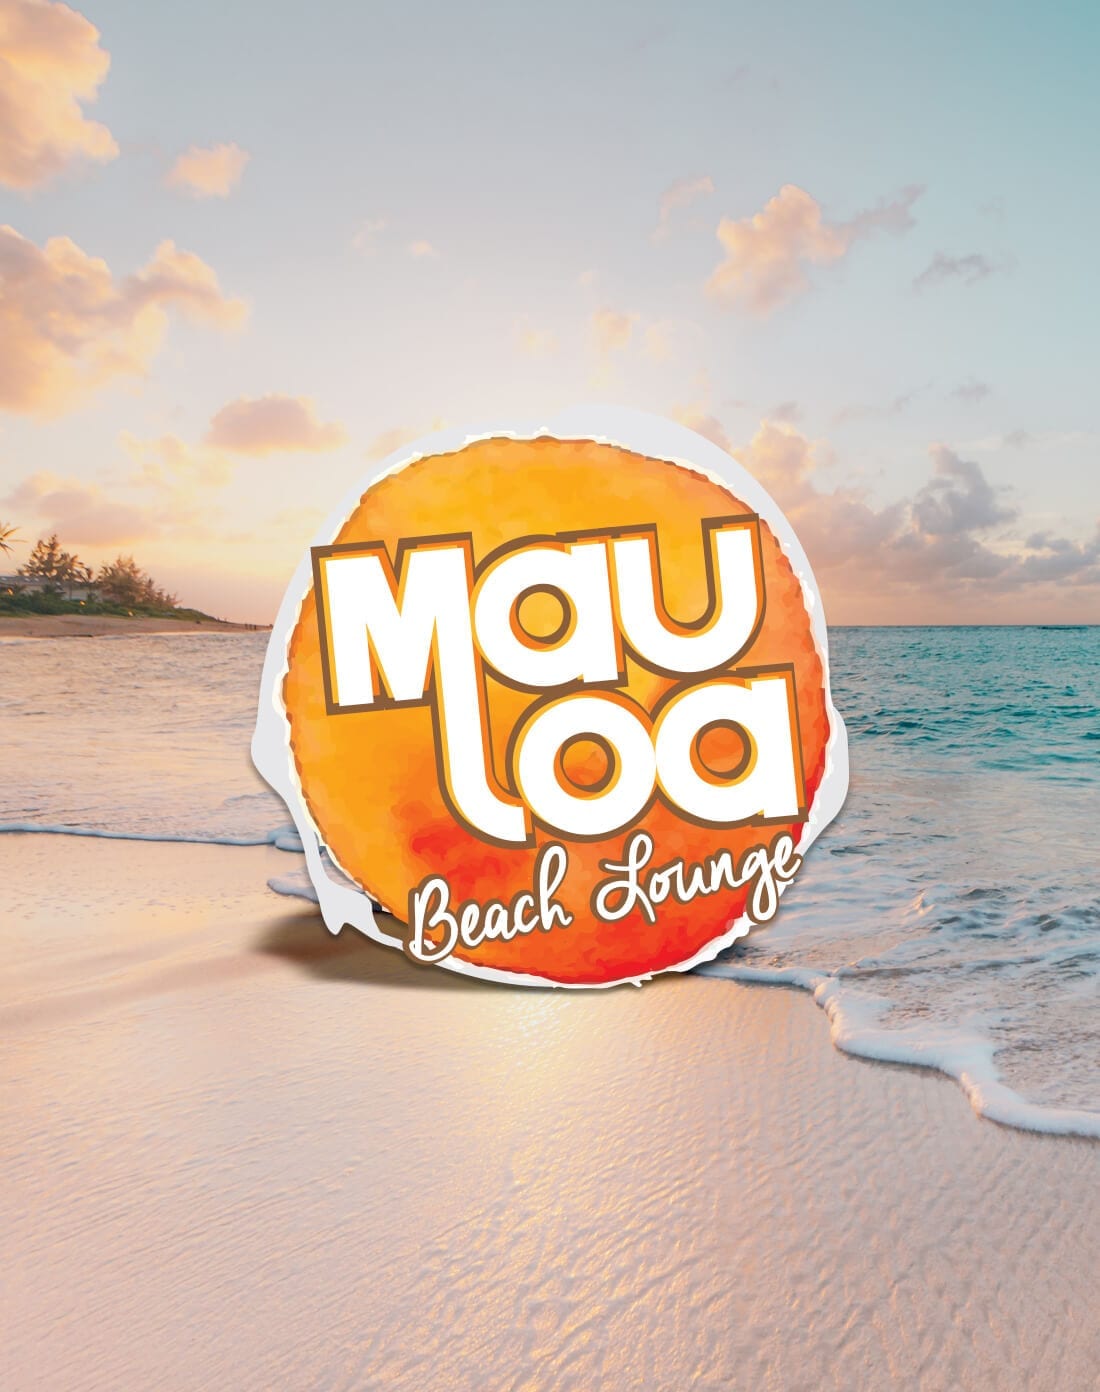 Mauloa Beach Lounge